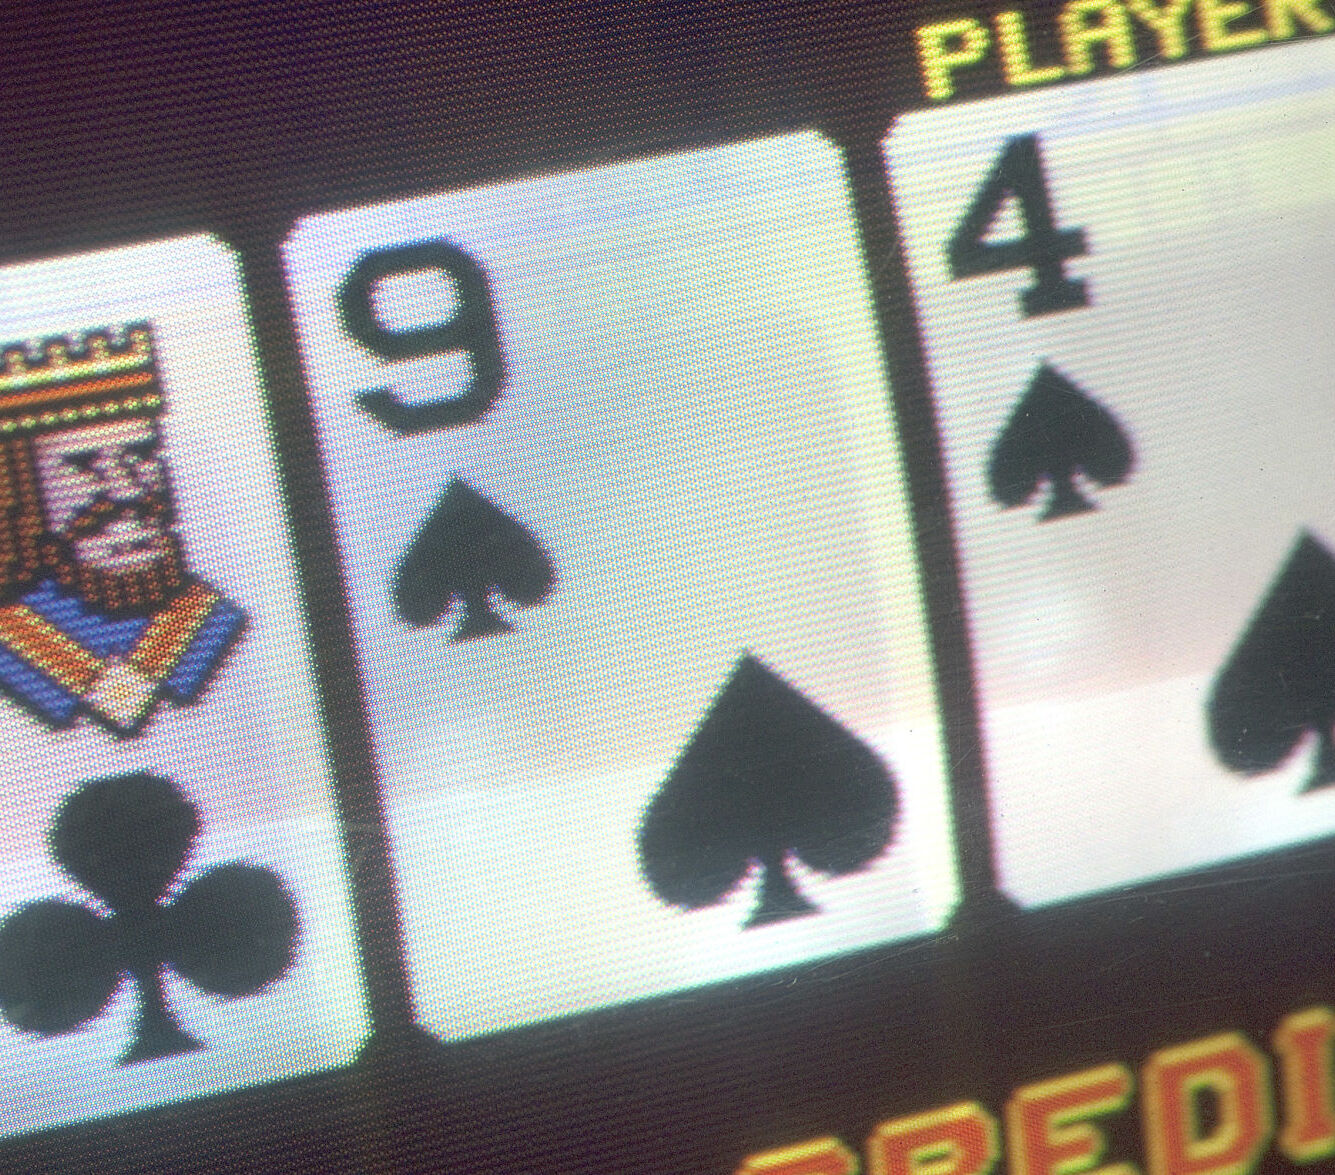 Should Missouri ban or regulate unlicensed slot machines?